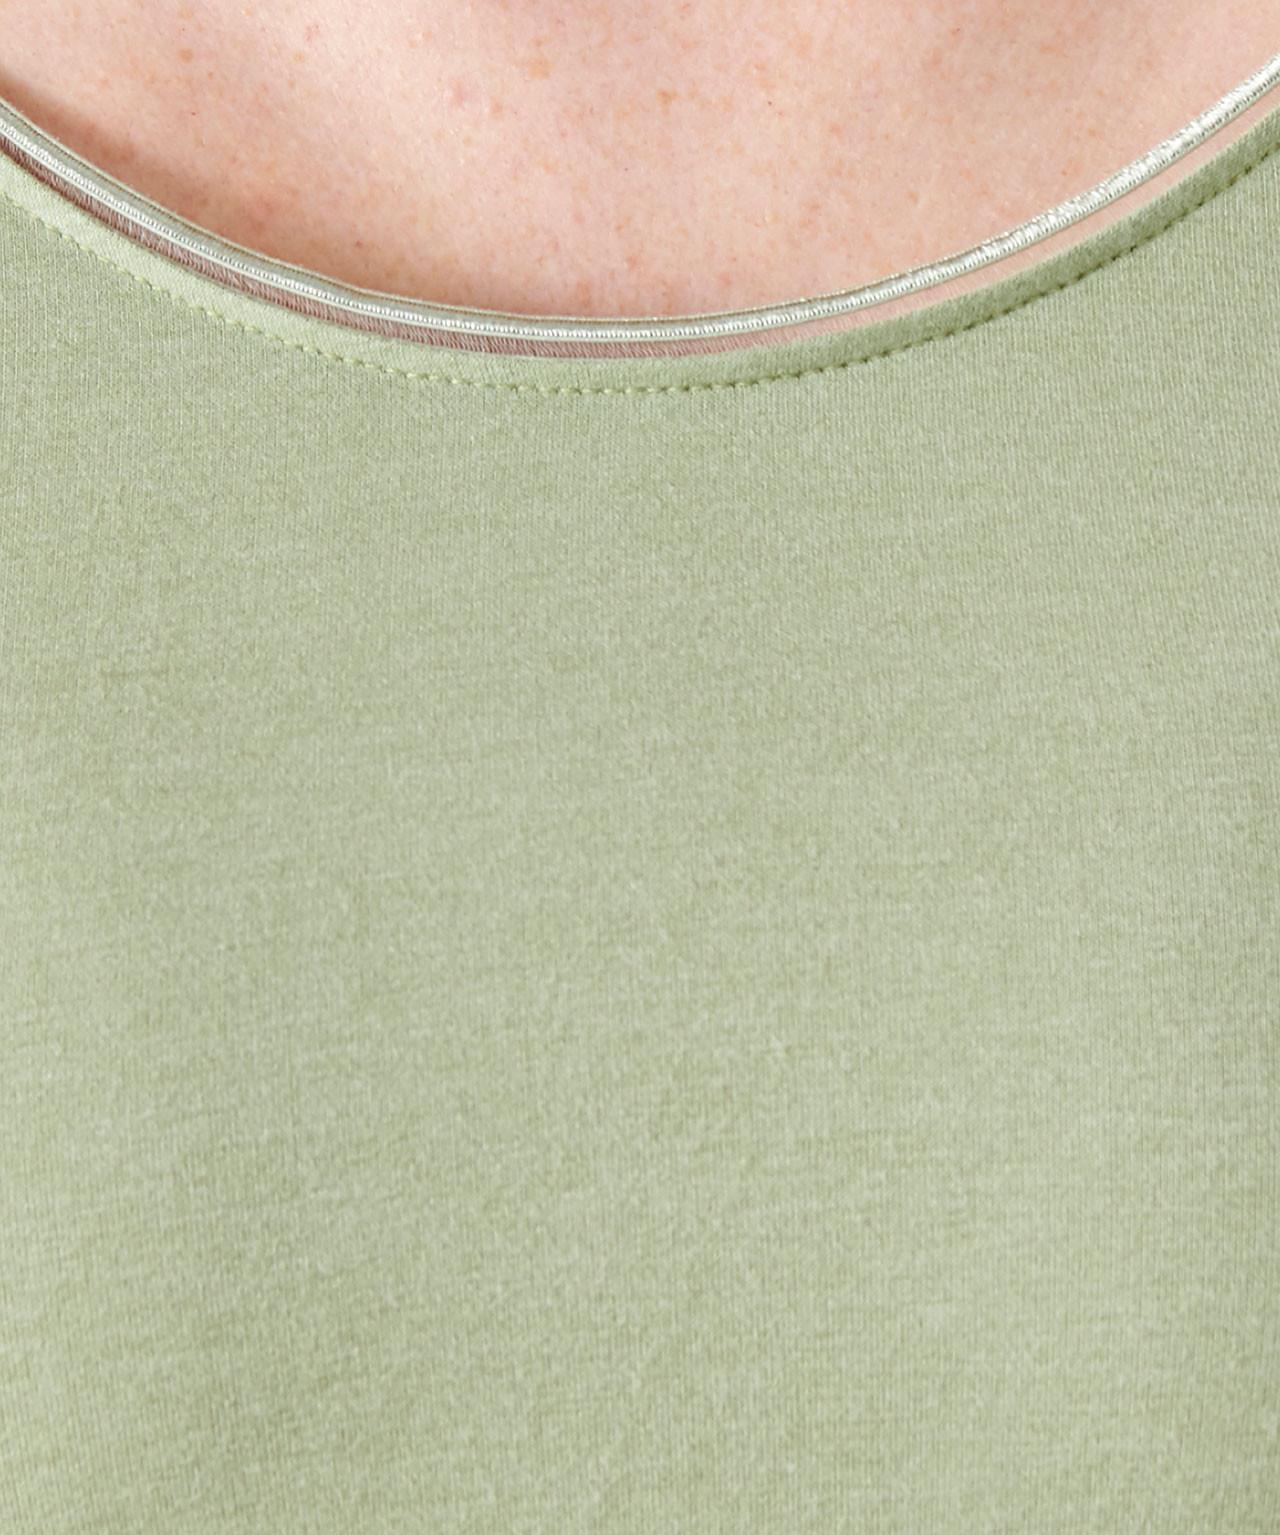 Damart  Tee-shirt manches longues Thermolactyl Sensitive, chaleur Soft 2. 